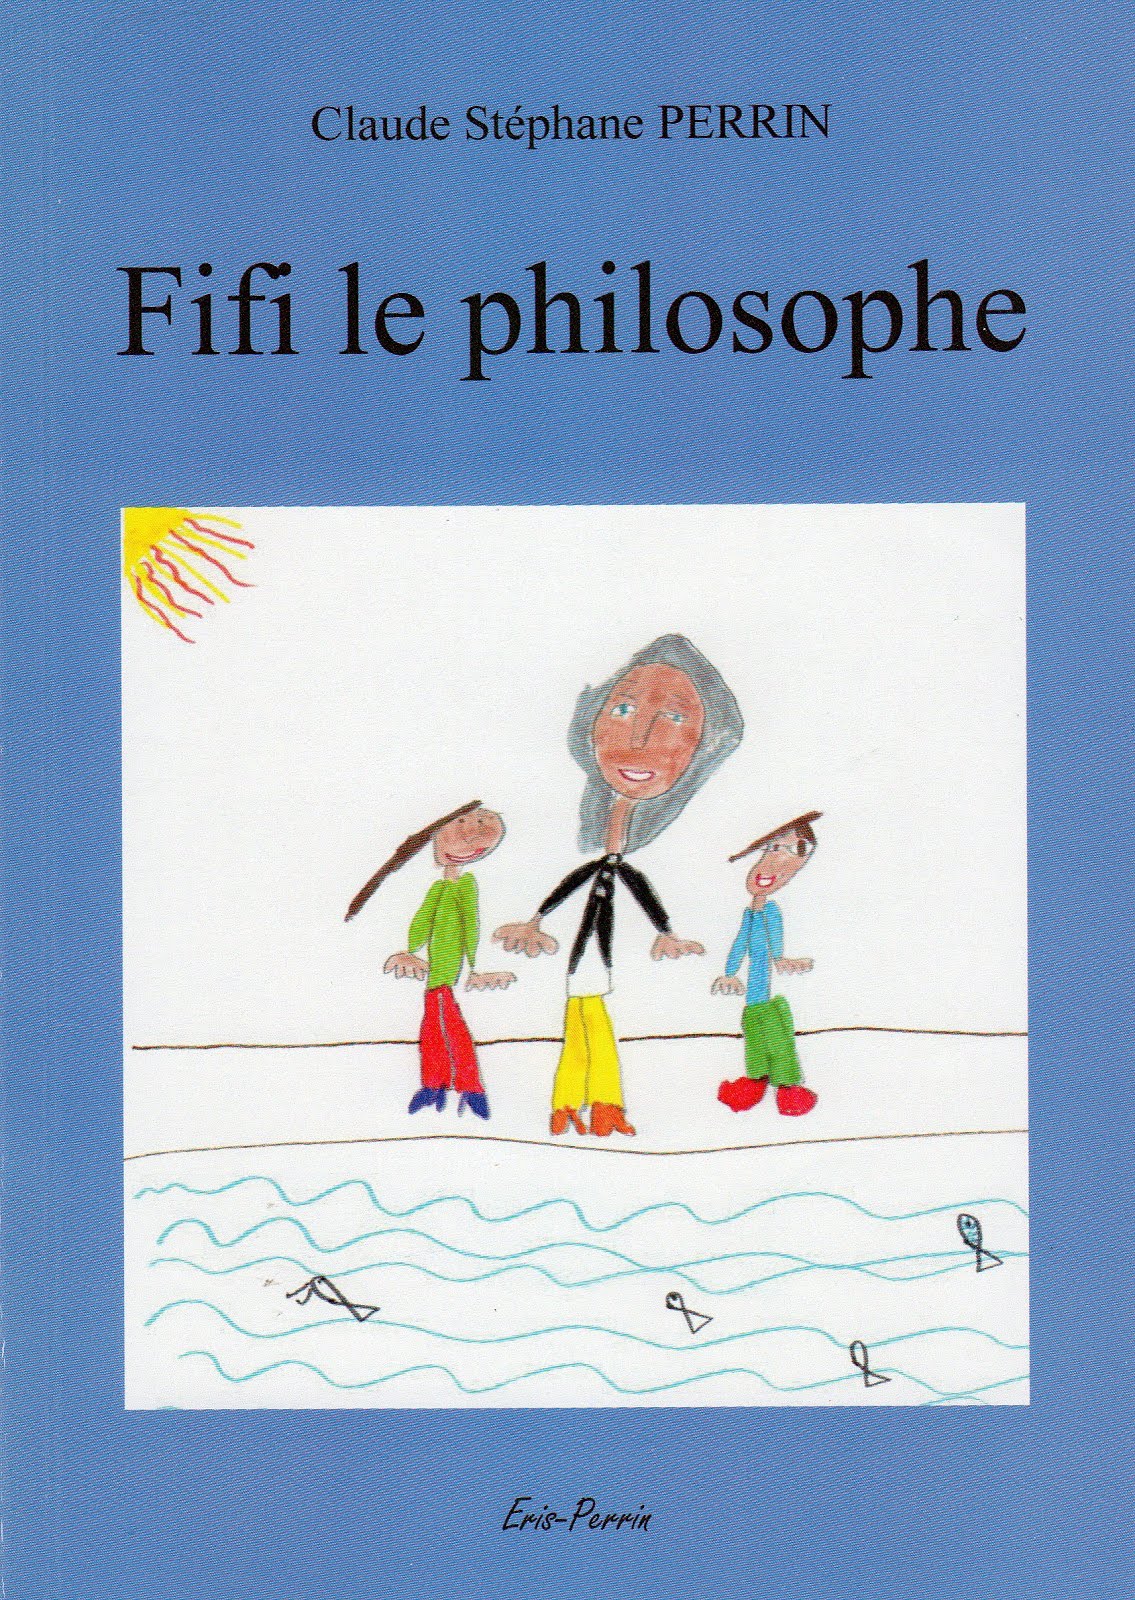 Fifi le philosophe